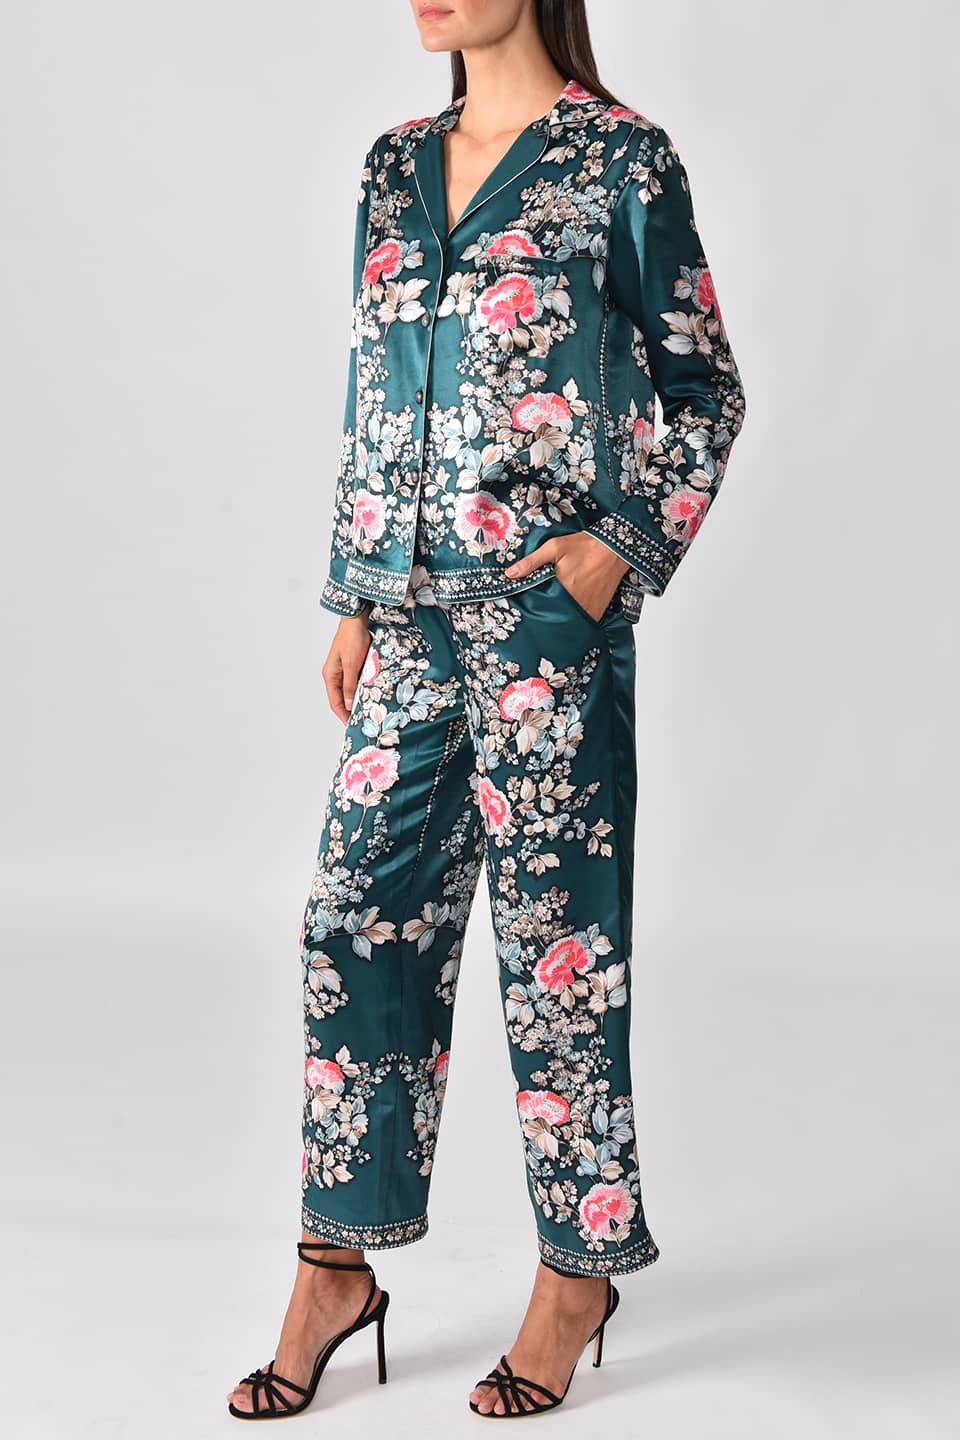 Model wearing satin pyjama style jacket from fashion designer Vilshenko, posing full body on left side